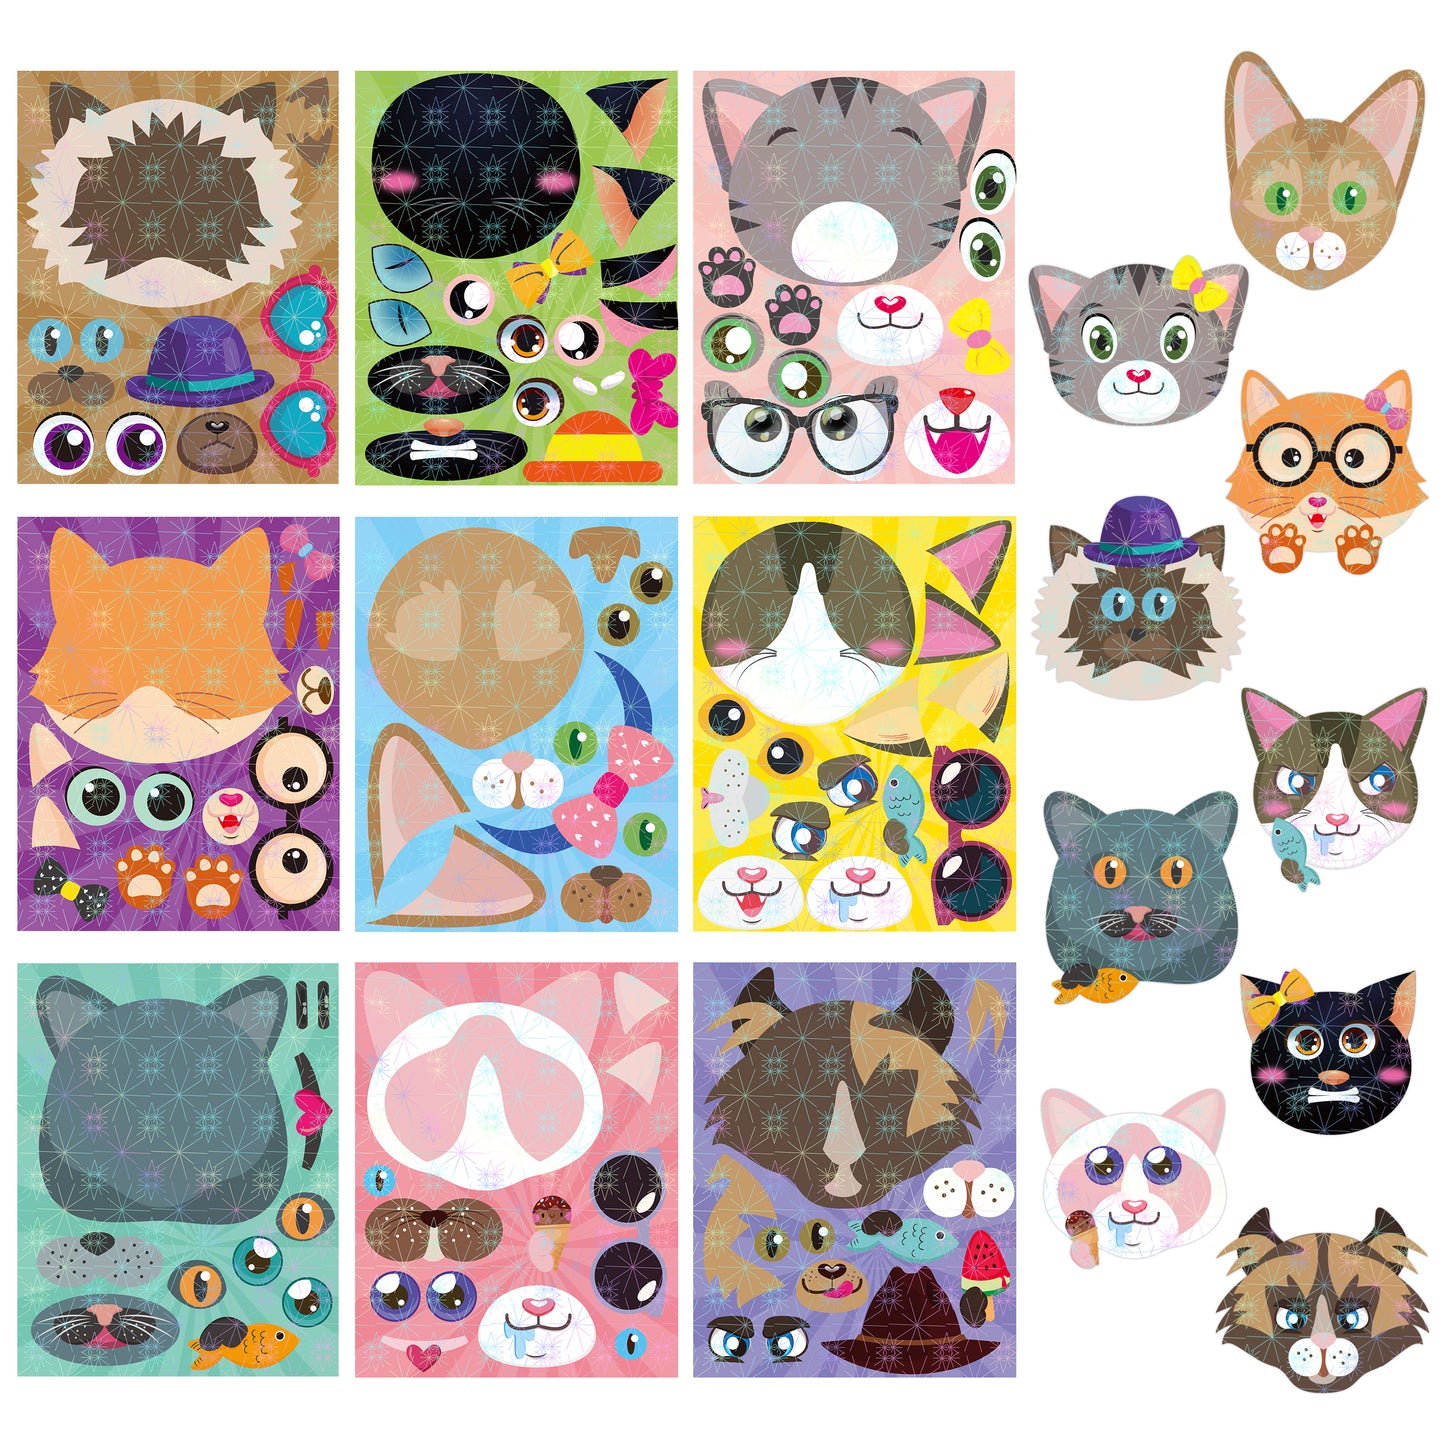 HubirdSall 45Pcs Cats Make-a-Face Stickers Make You Own Cats Holograph